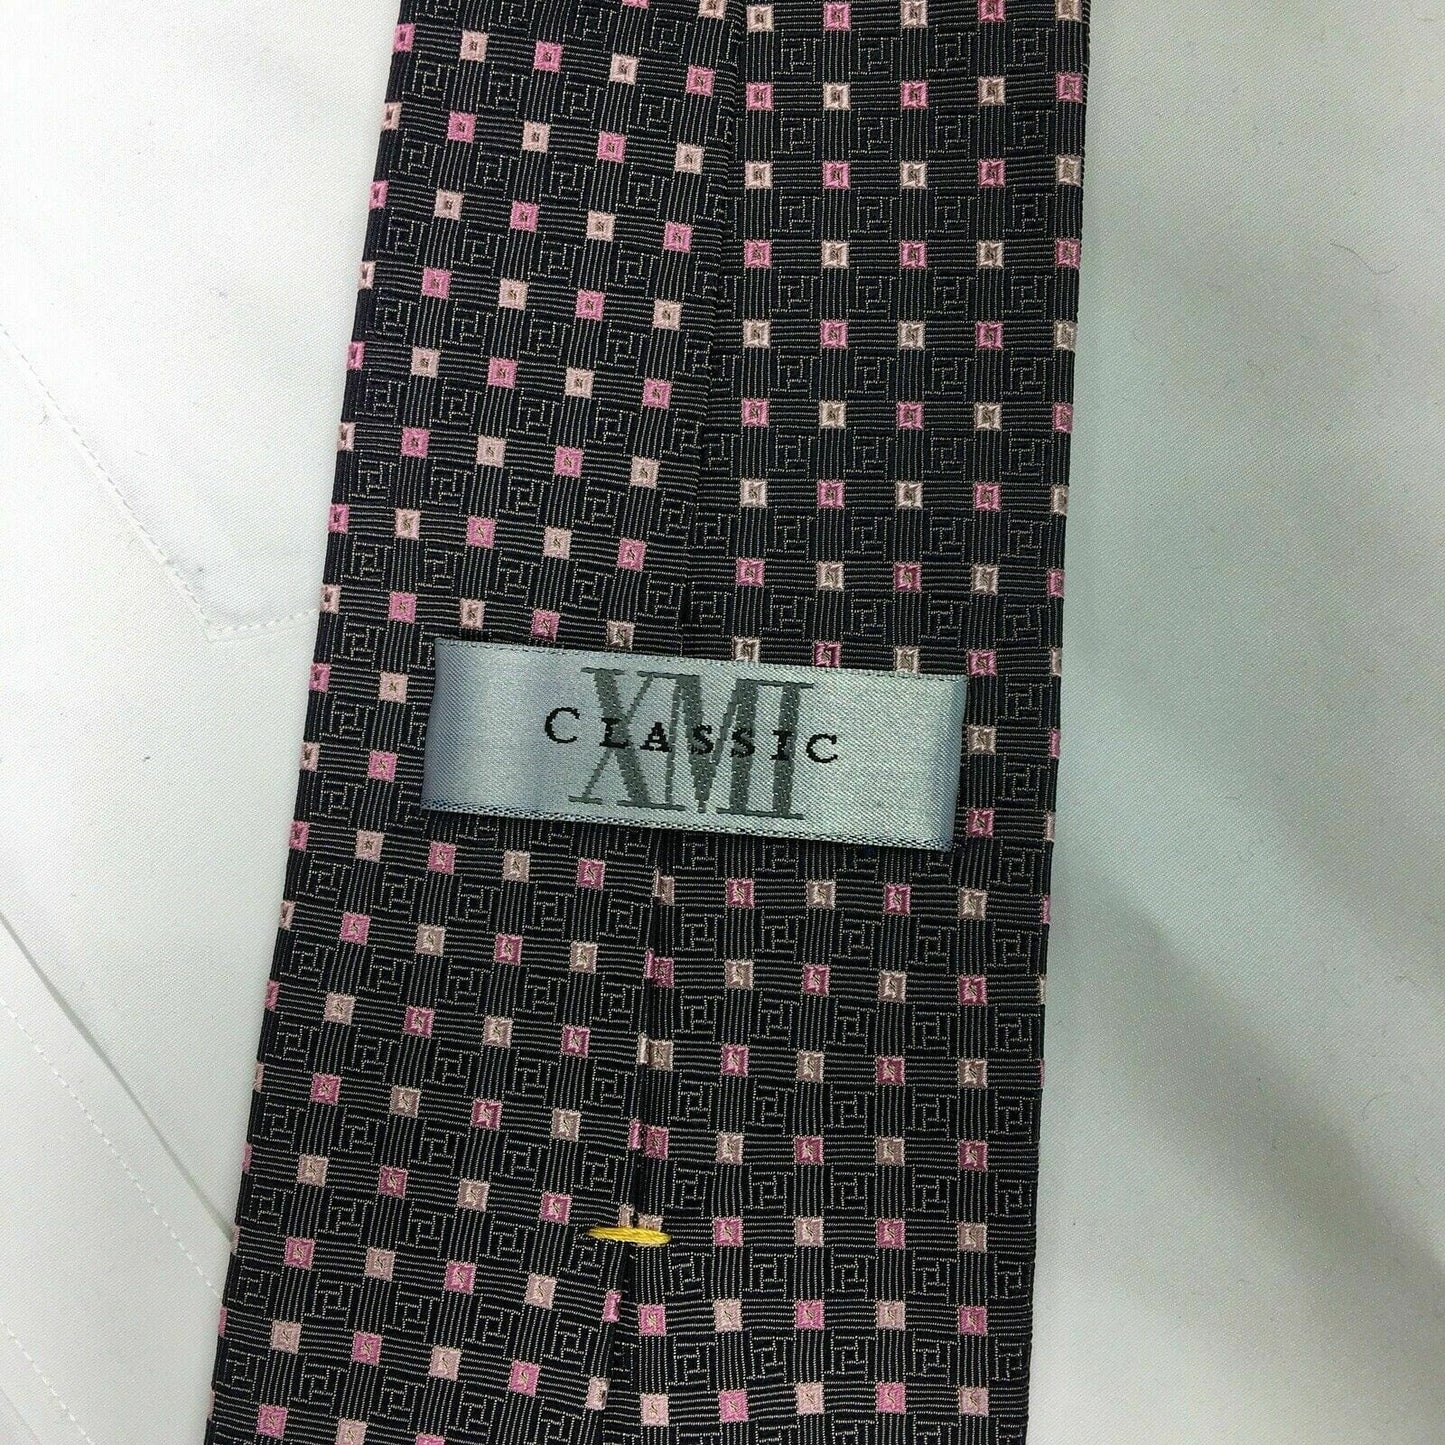 Sophisticated XMI Classic Mens Black Pink Square Pattern Italian Silk Neck Tie - Very Good